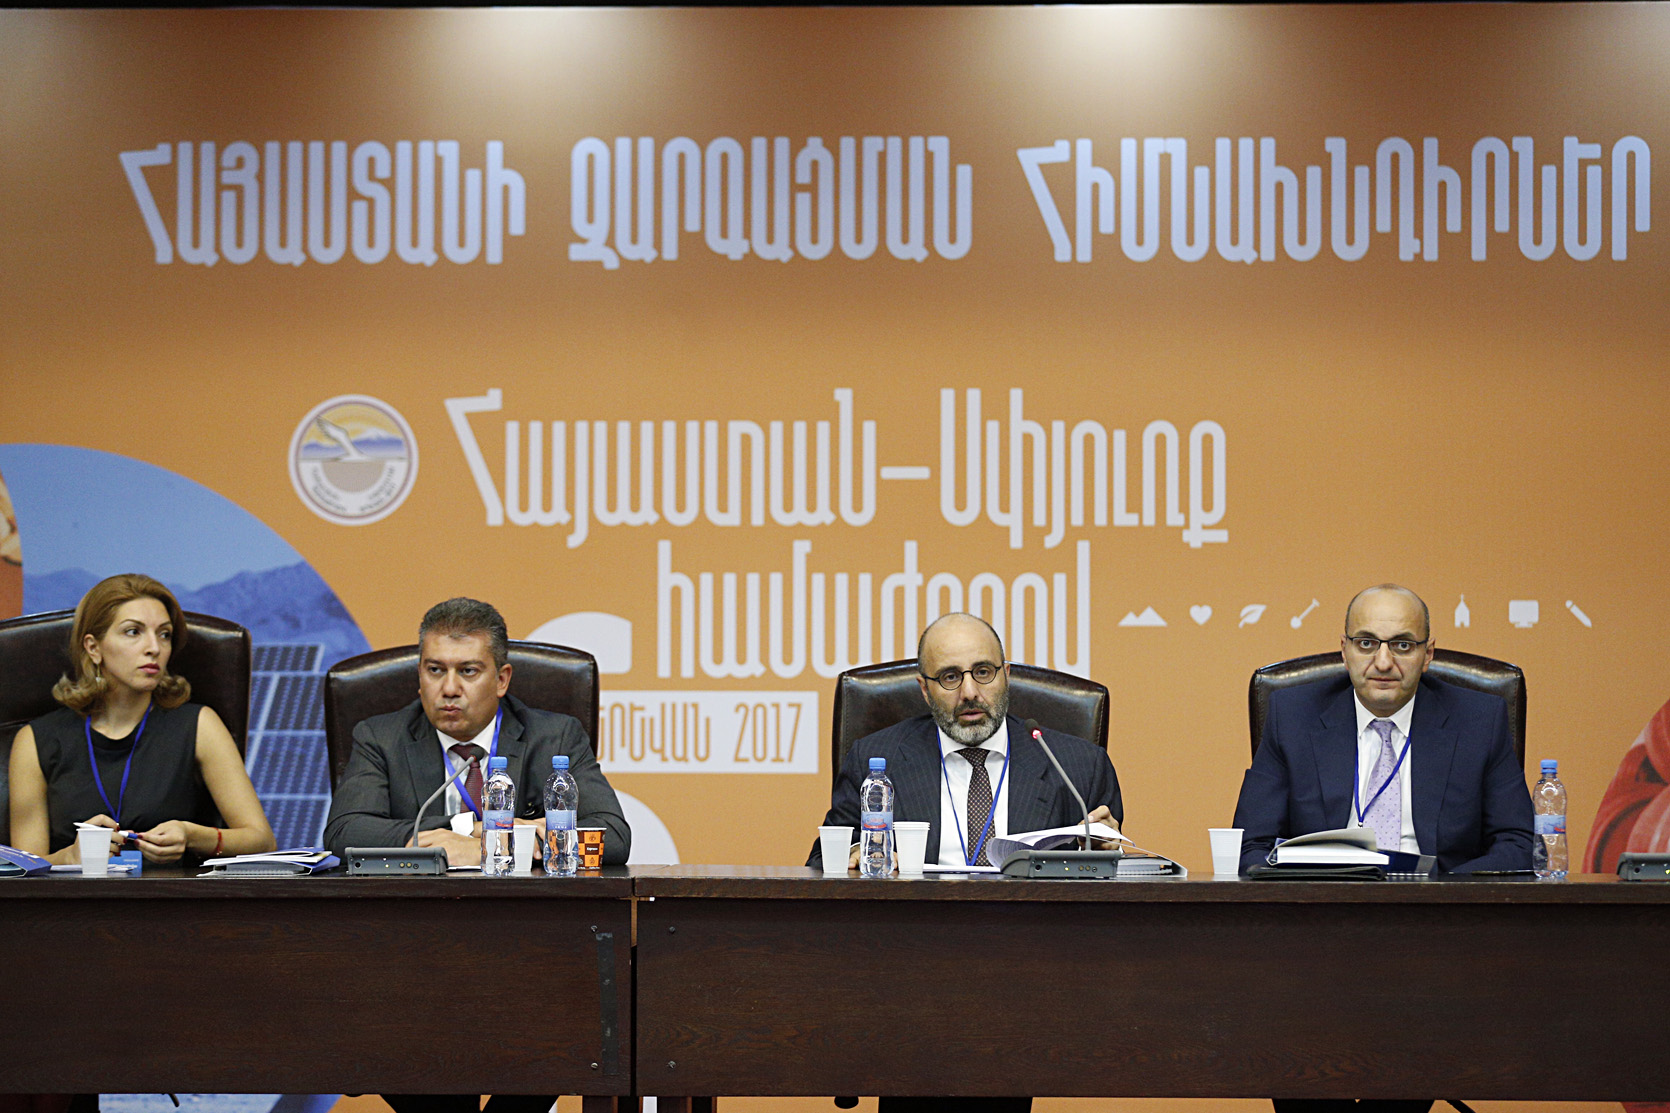 Discussions on Armenia’s economic agenda held at the 6th Armenia-Diaspora PanArmenian Conference